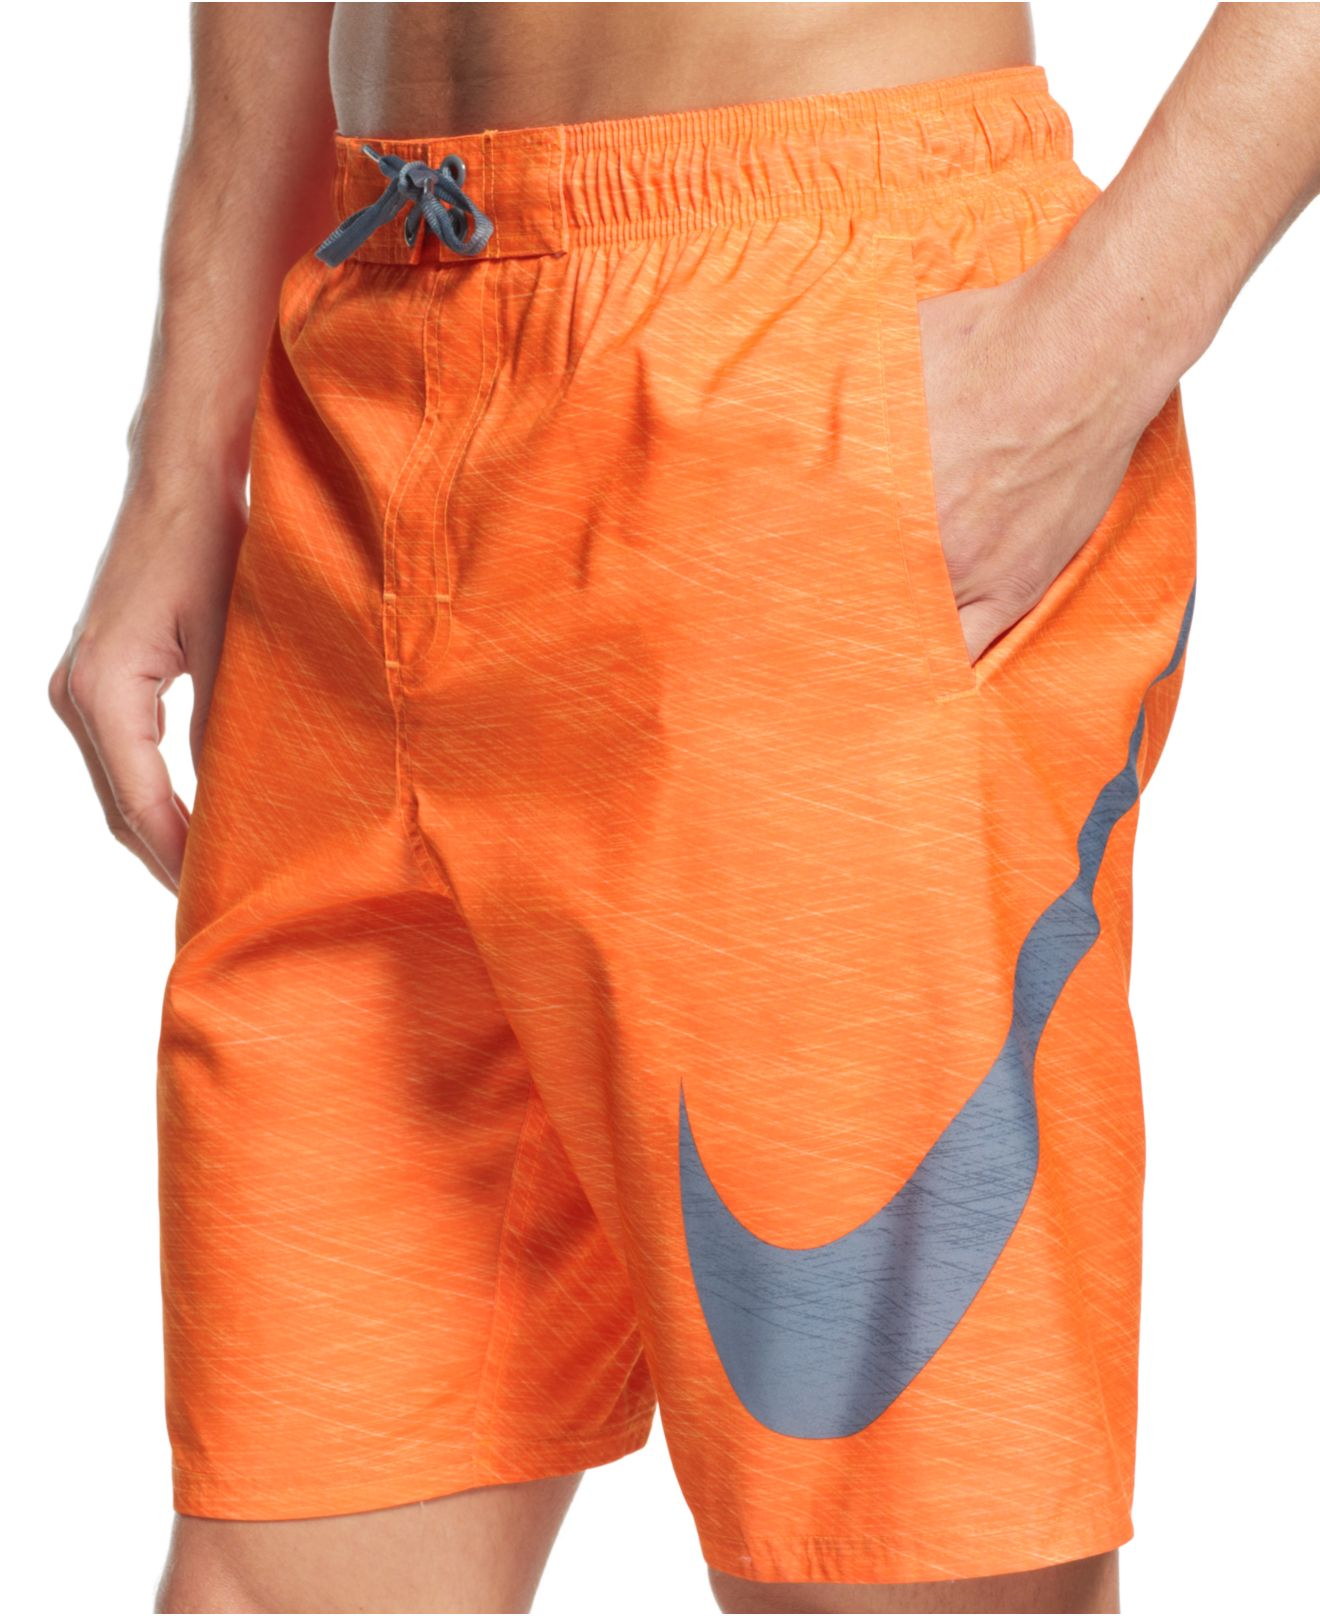 orange nike swim shorts online 252b9 6a02b